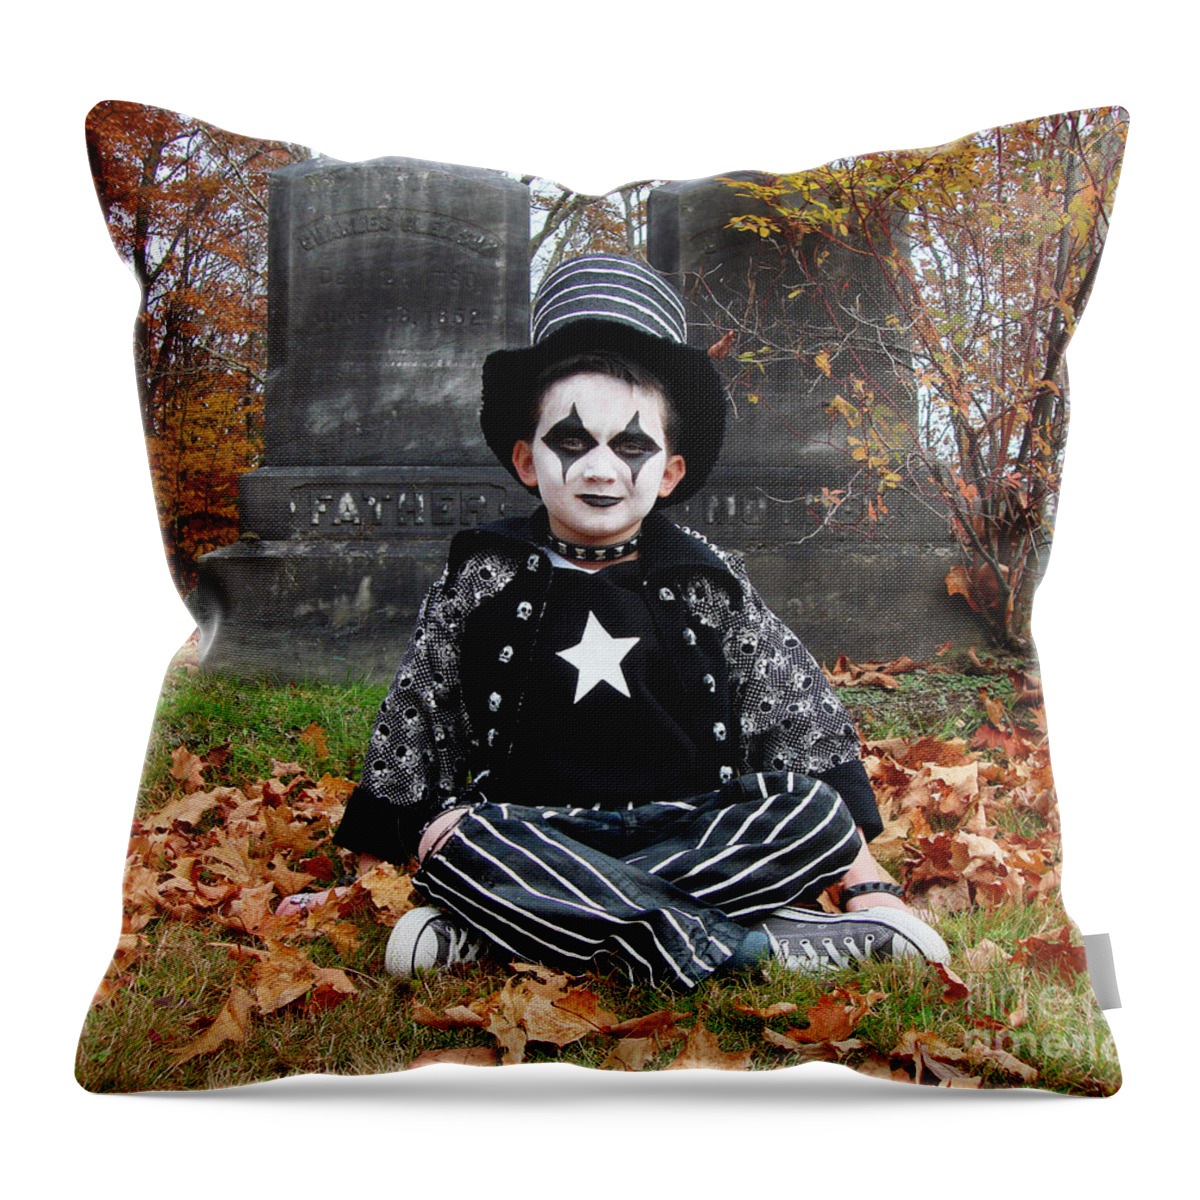 Halloween Throw Pillow featuring the photograph Rotten Rocker Costume 4 by Amy E Fraser